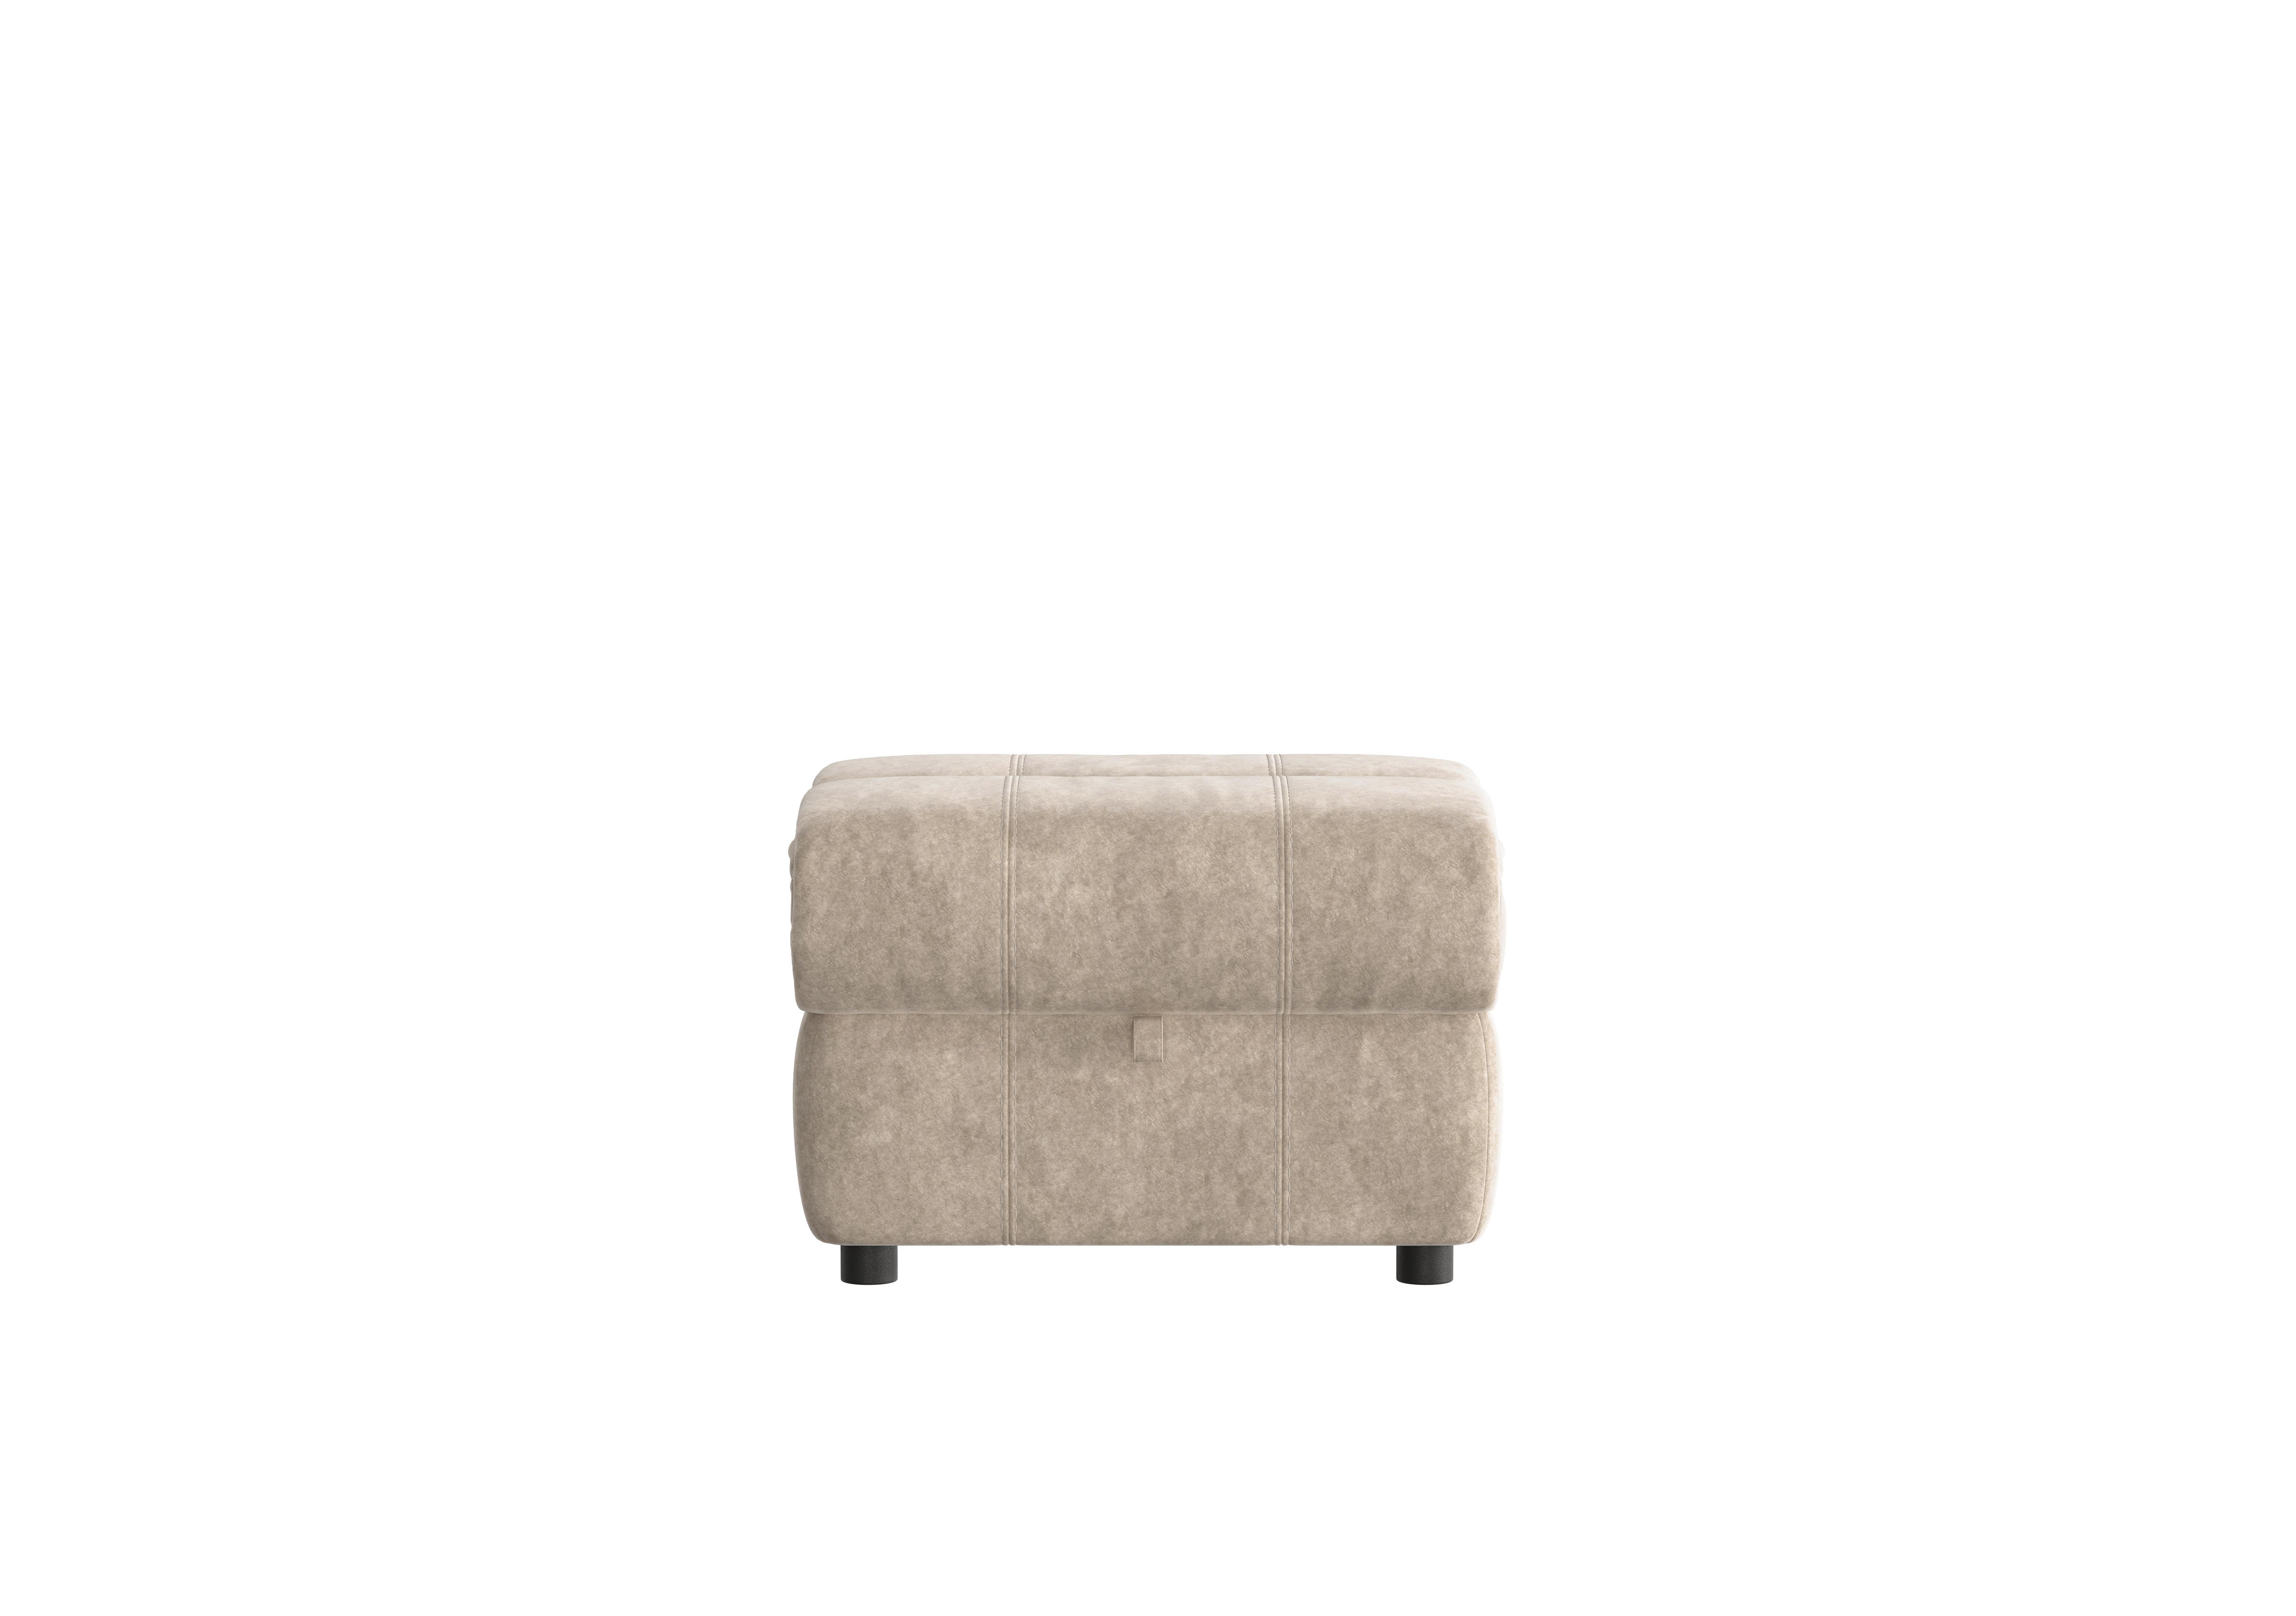 Moreno Fabric Storage Footstool in Bfa-Bnn-R26 Cream on Furniture Village